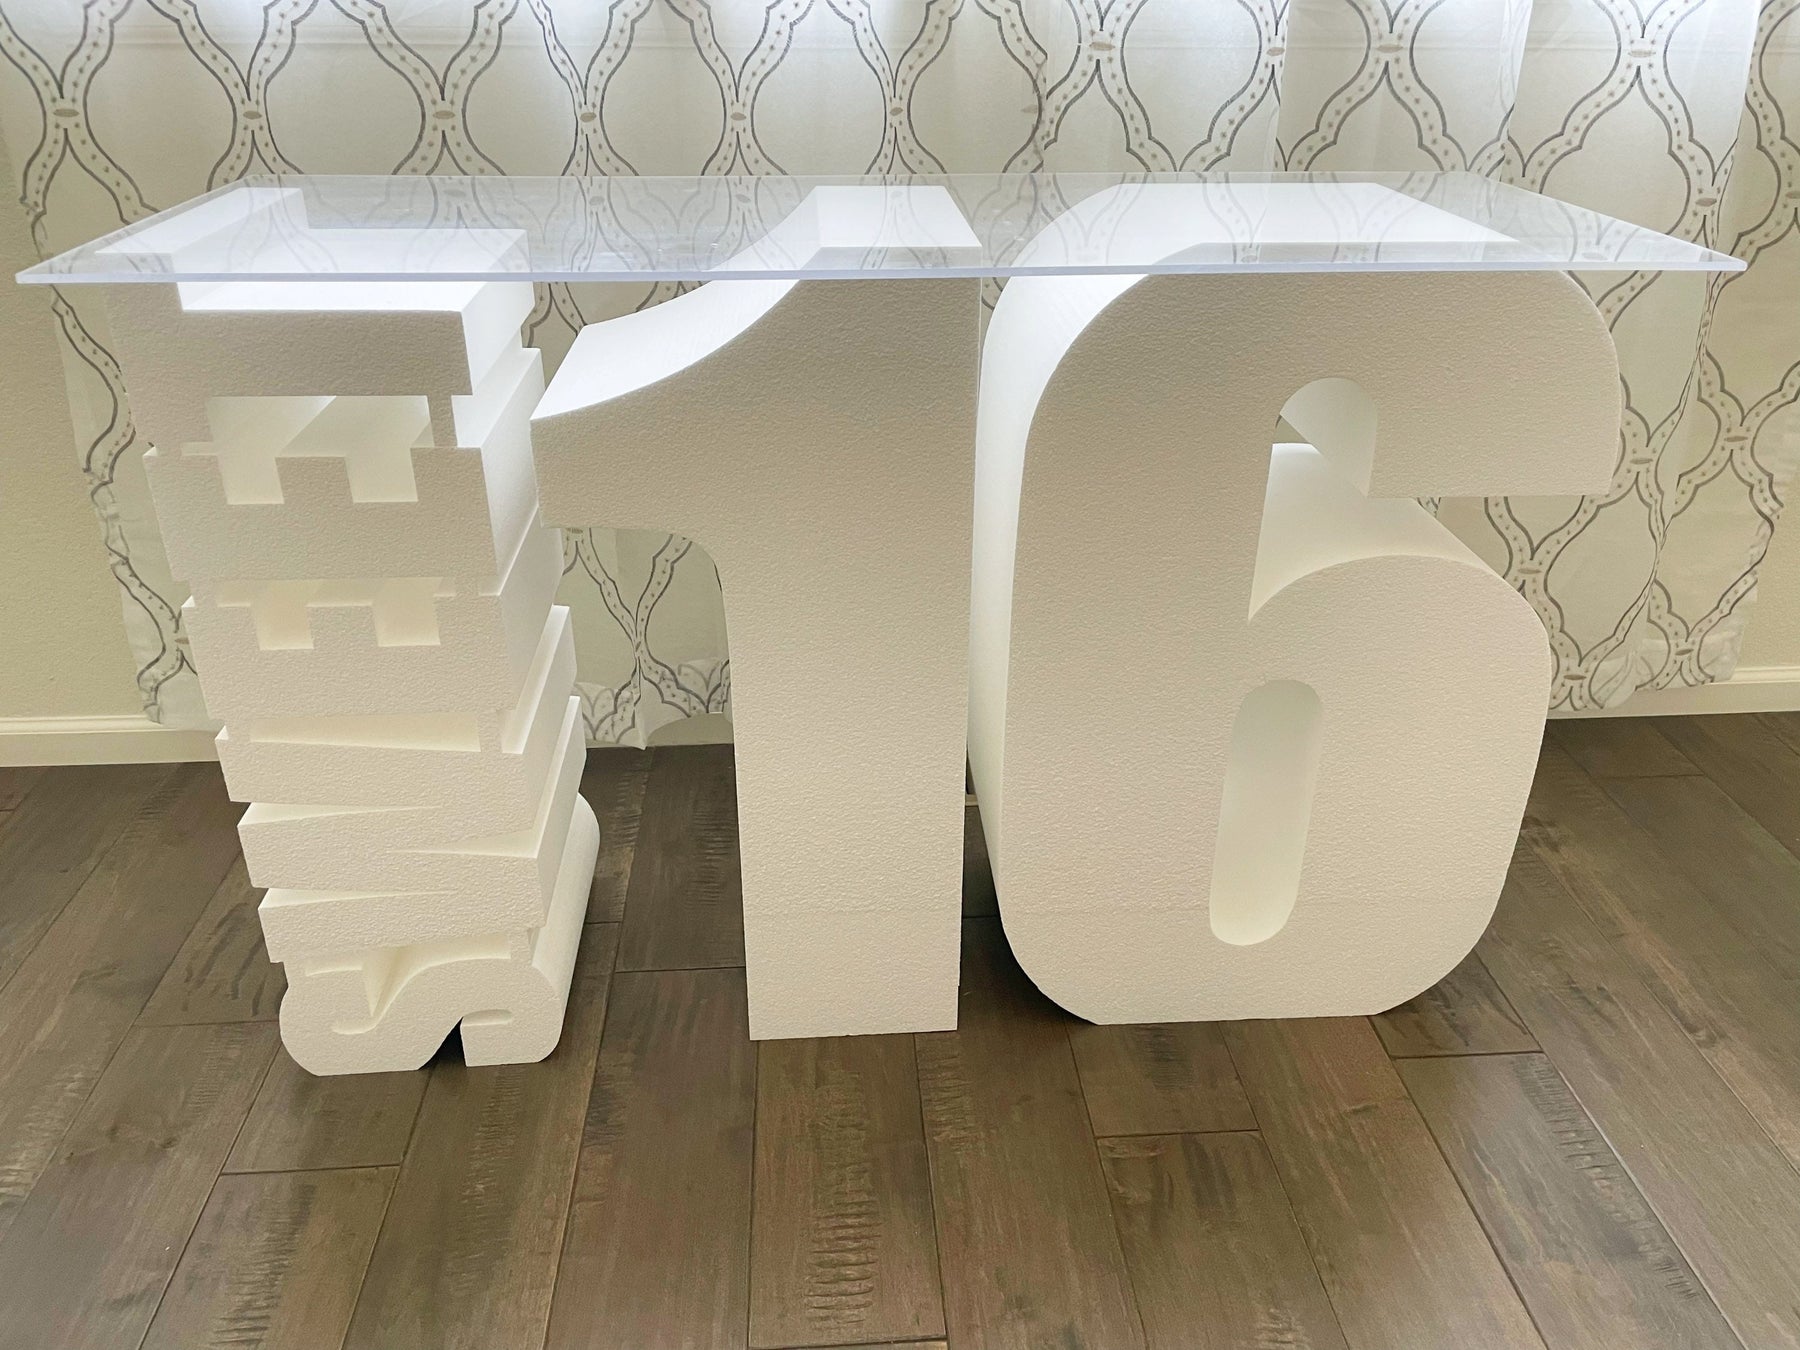 Large Freestanding Foam Letters set- Prop, Dessert Table for Sweet 16 –  SoCal Event Decor